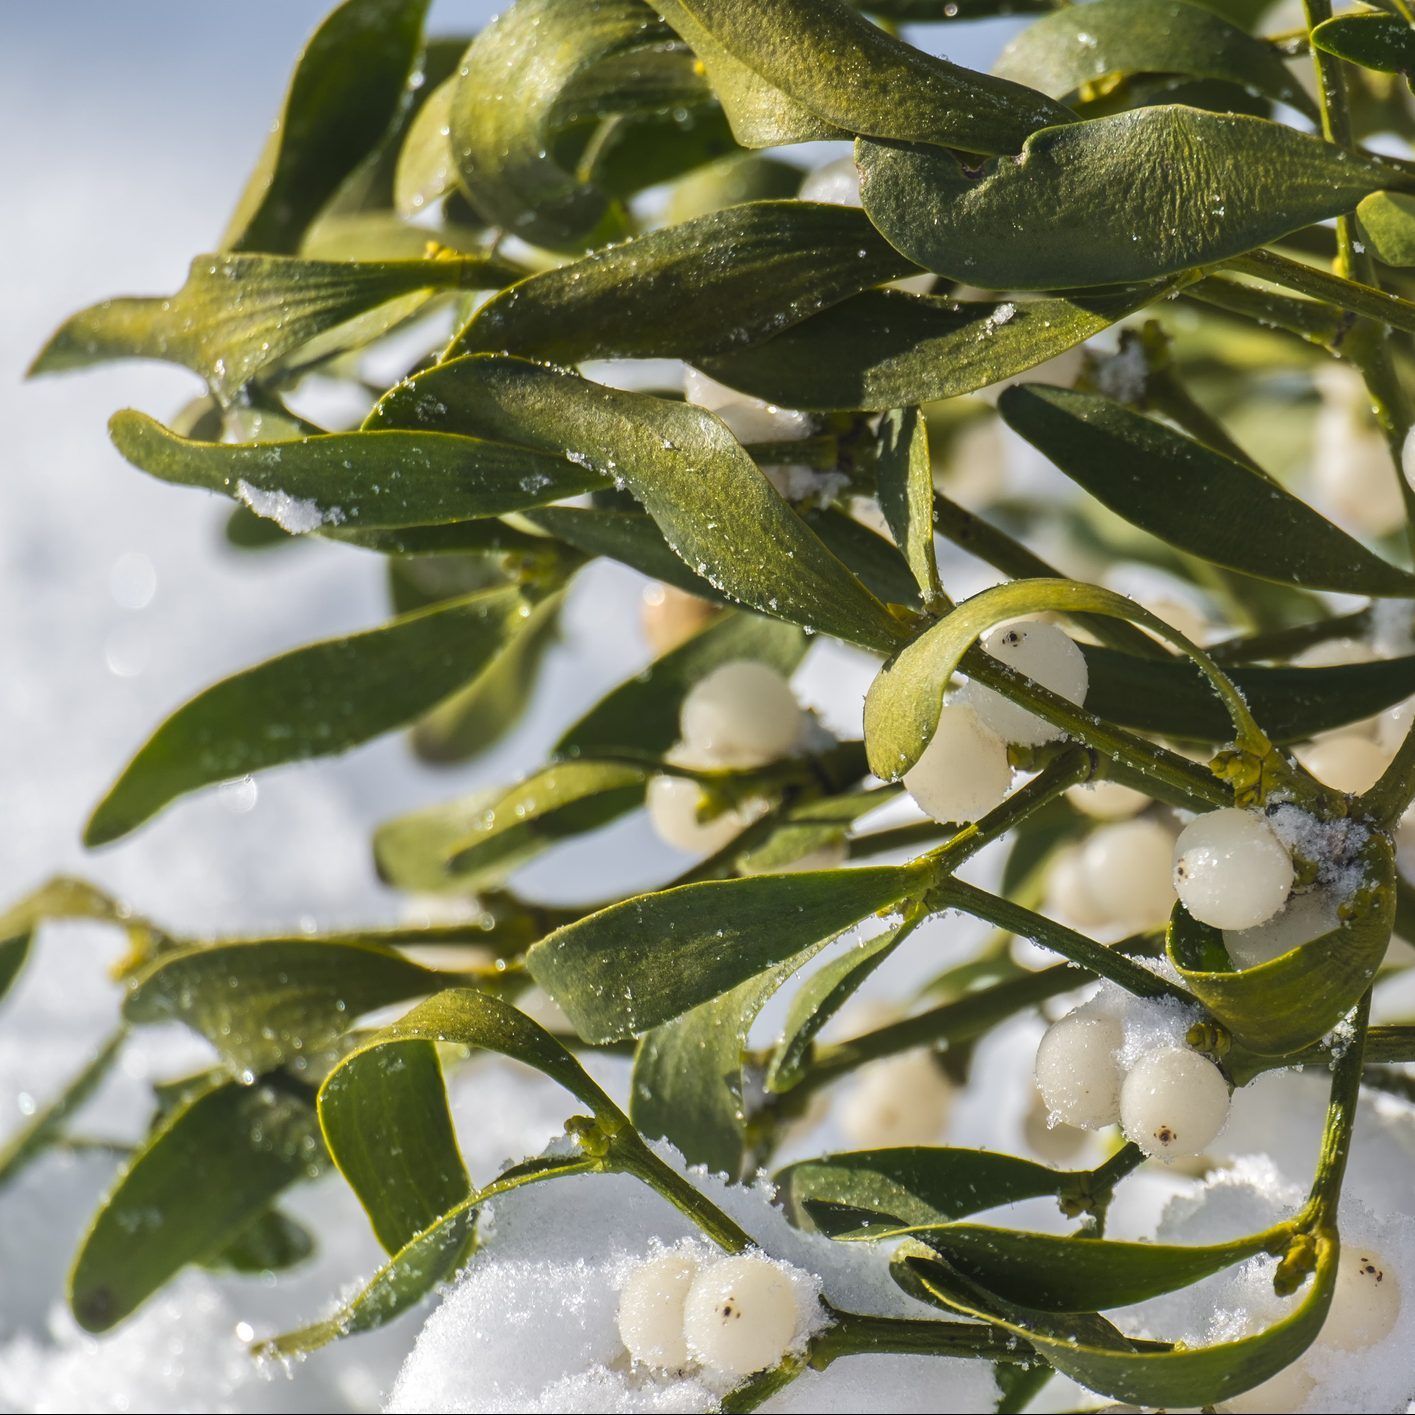 Evergreen branch of mistletoe with ripe berries on snow (Viscum album)